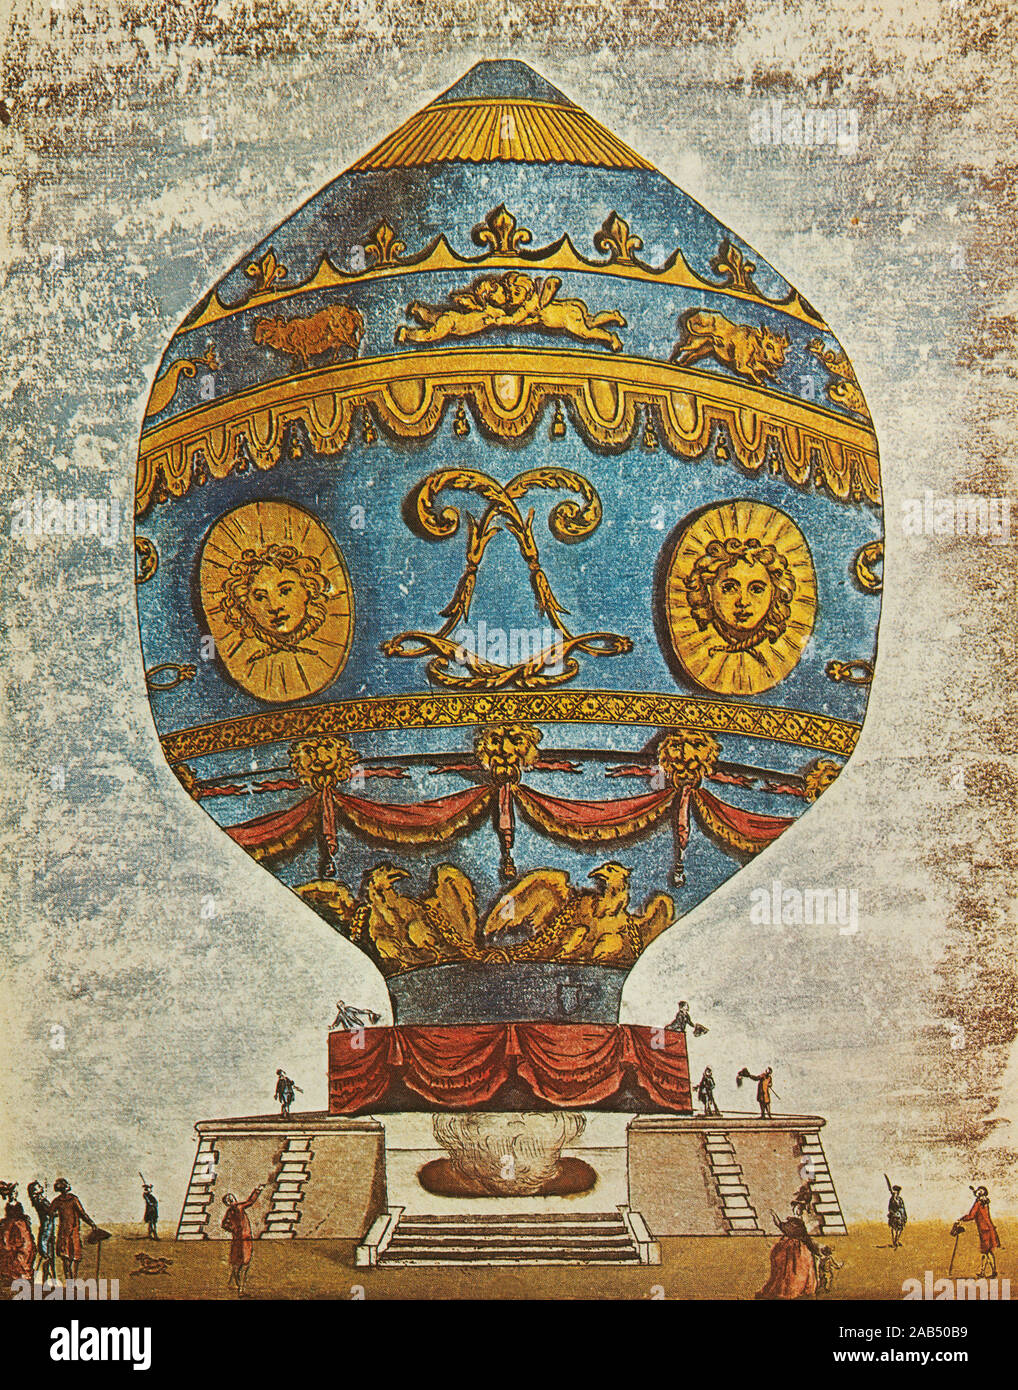 Gravur, das erste Experiment der Brüder Montgolfier Ballon 21. November  1783 in Frankreich Stockfotografie - Alamy